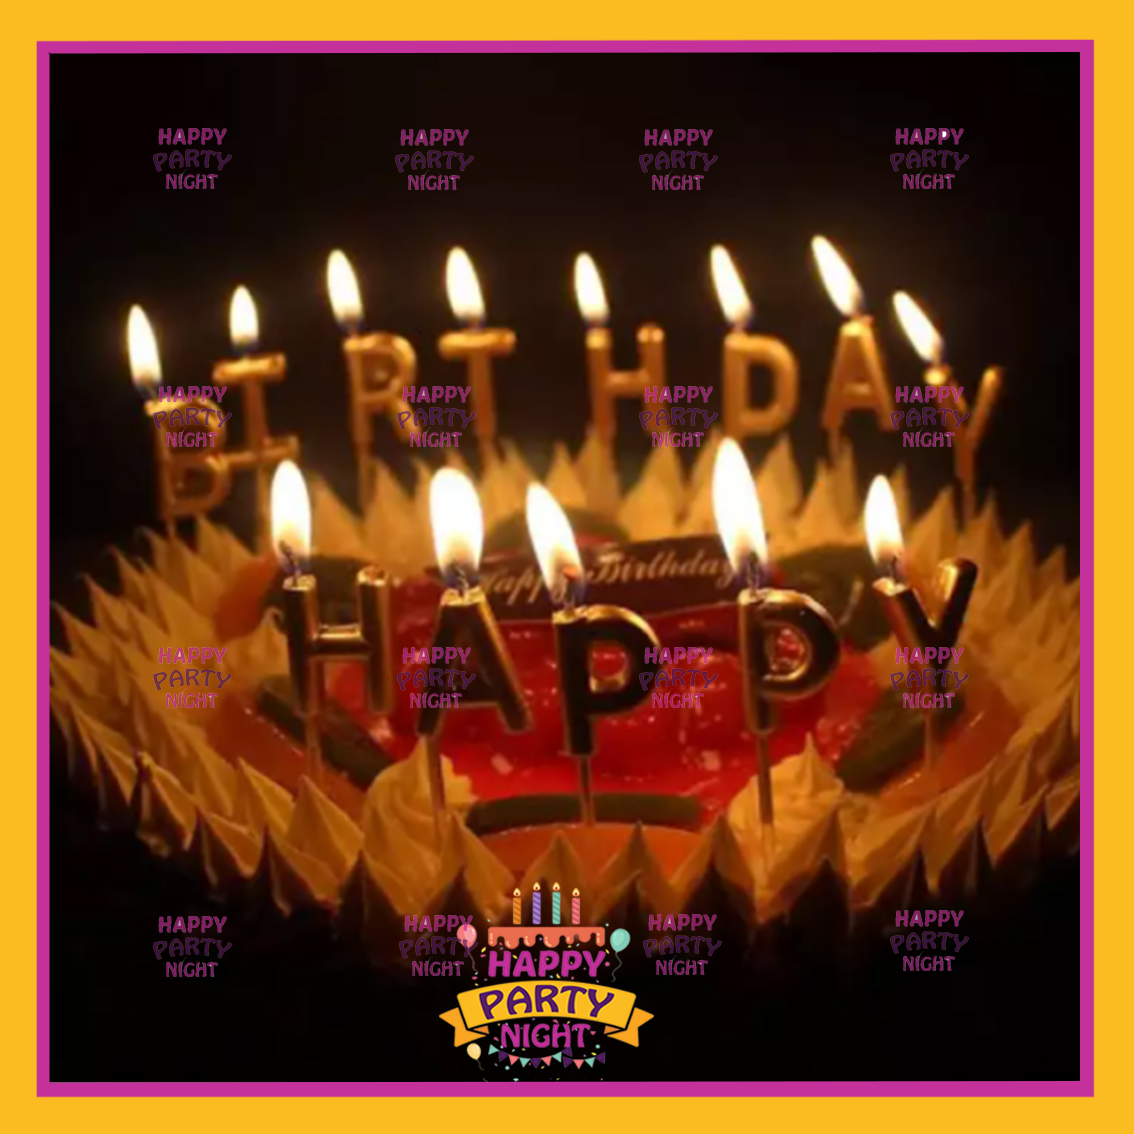 Game Night birthday cake. ♥ - MiMaDa's Sweet Shop | Facebook